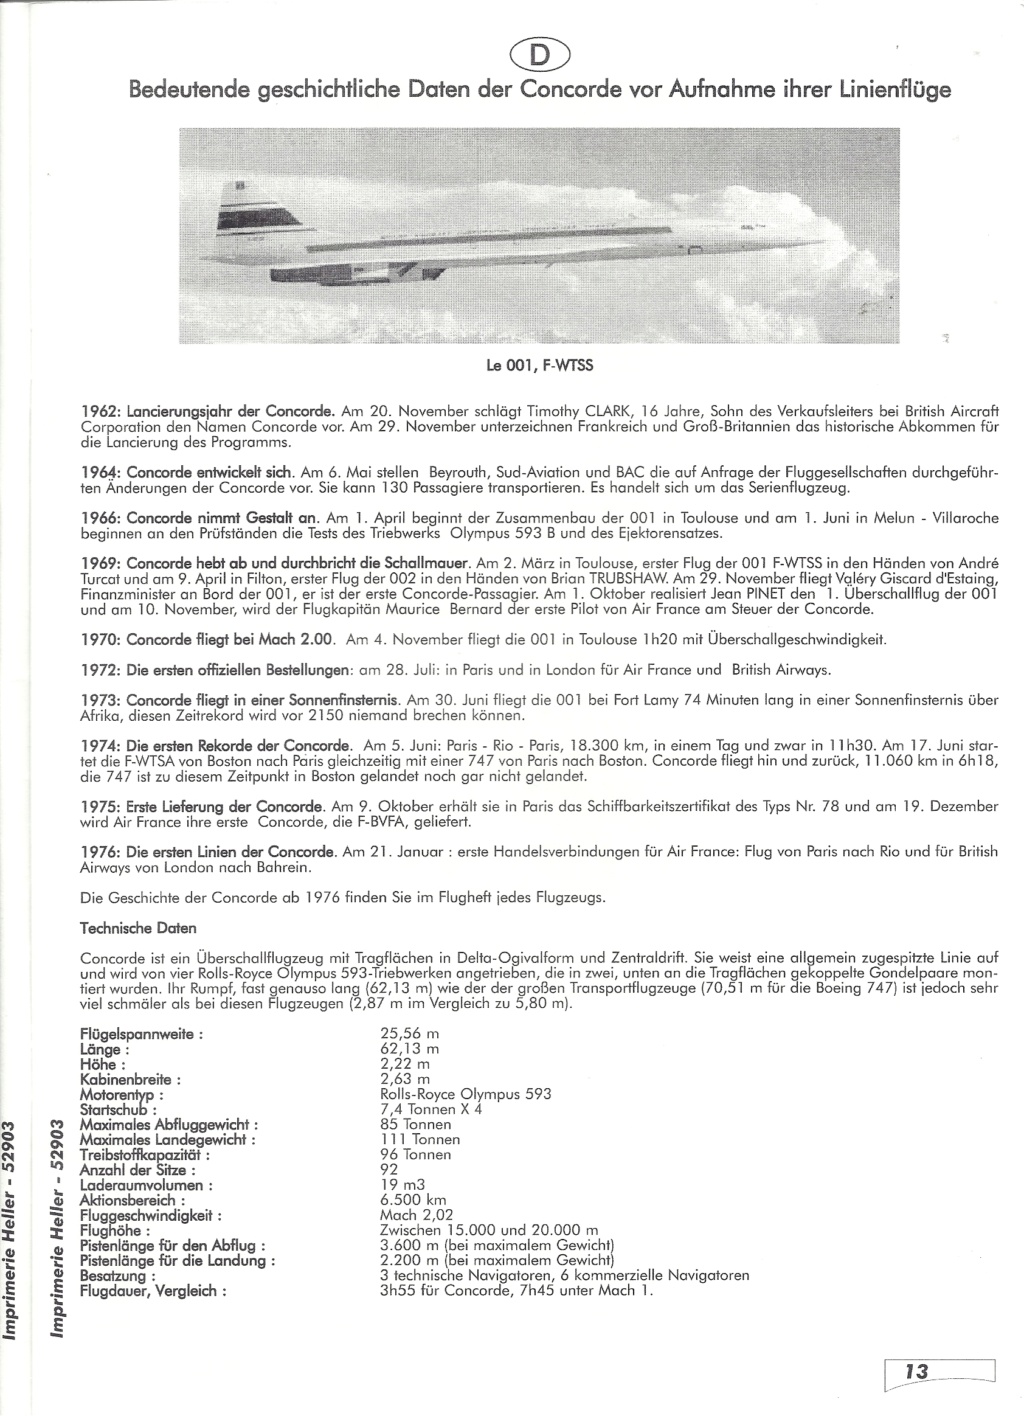 SUD AVIATION - BRITISH AIRCRAFT CORPORATION  CONCORDE 1/72ème Réf 52903 Notice Hell2263